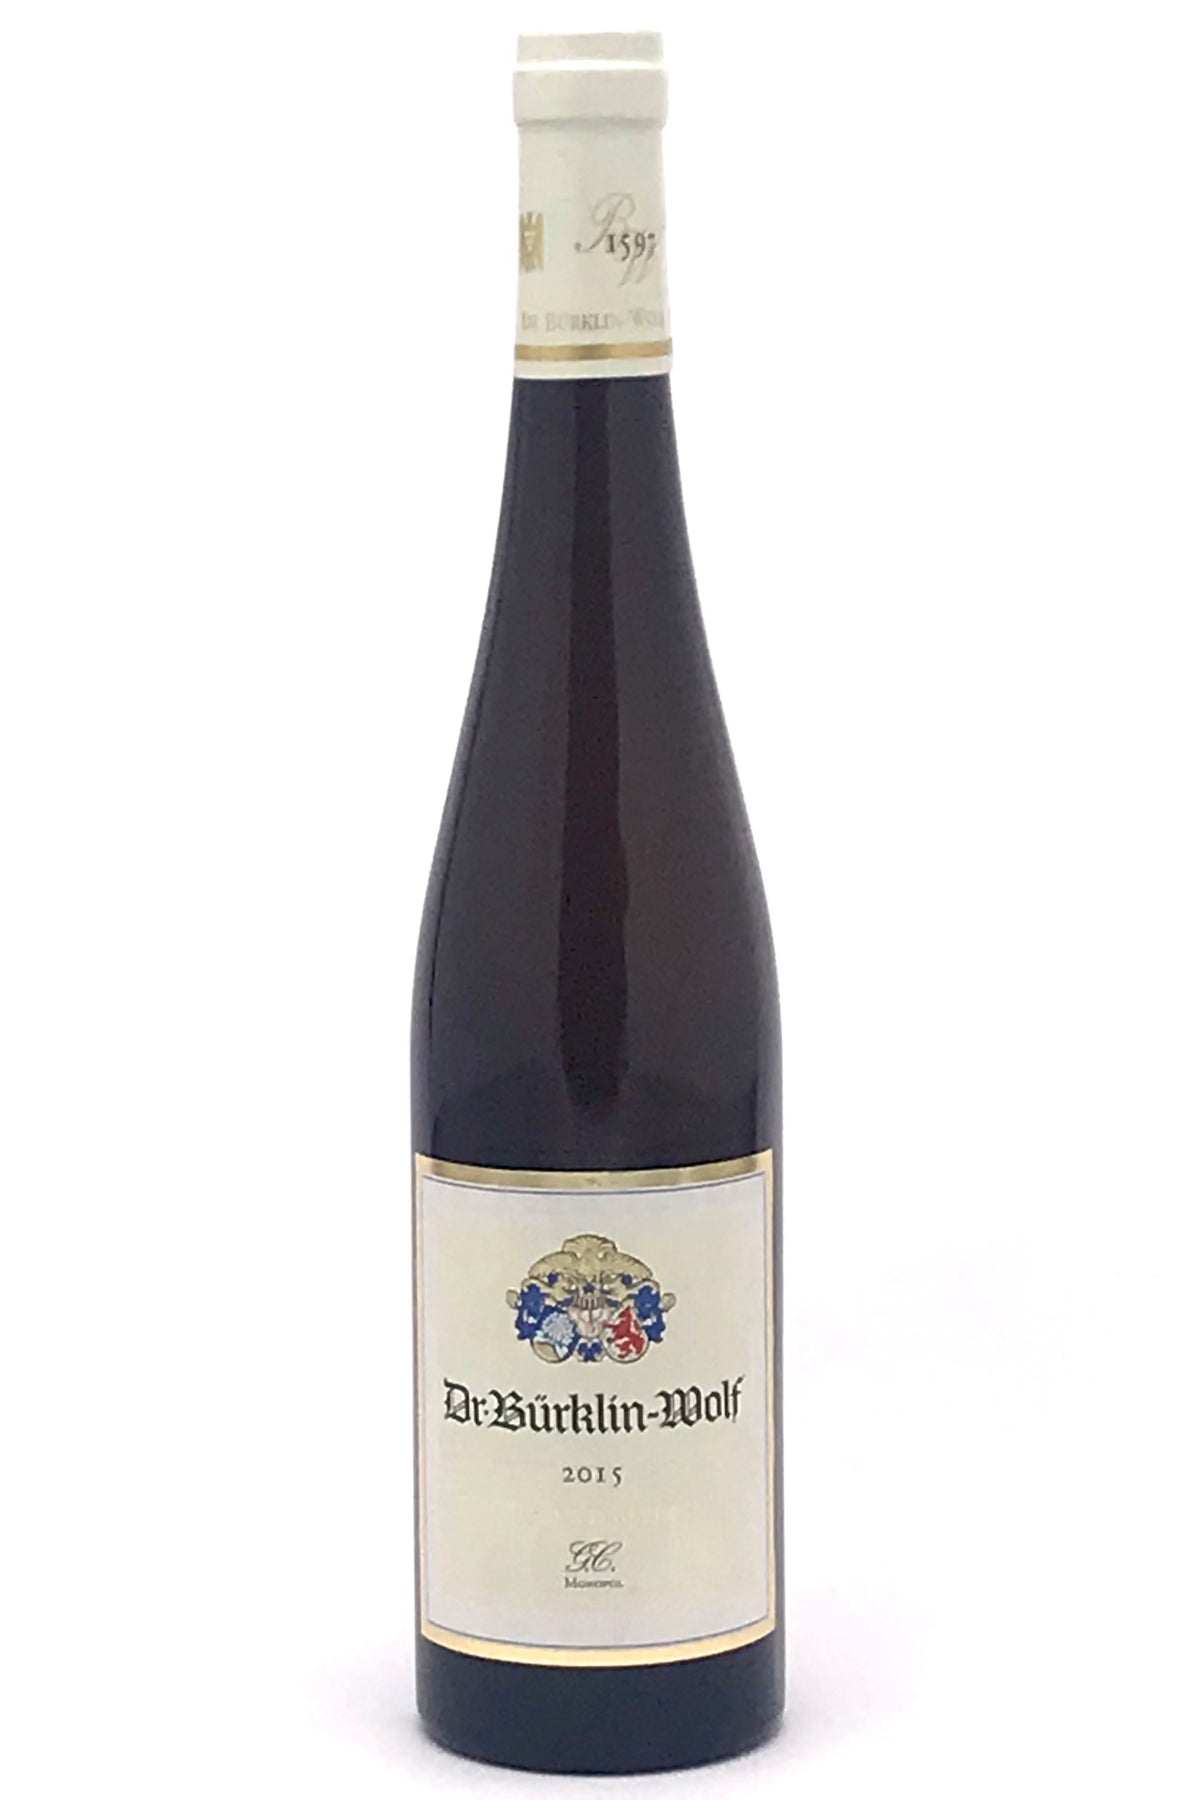 Burklin-Wolf 2015 Riesling Qualitätswein Dry Pfalz Gaisböhl G.C.